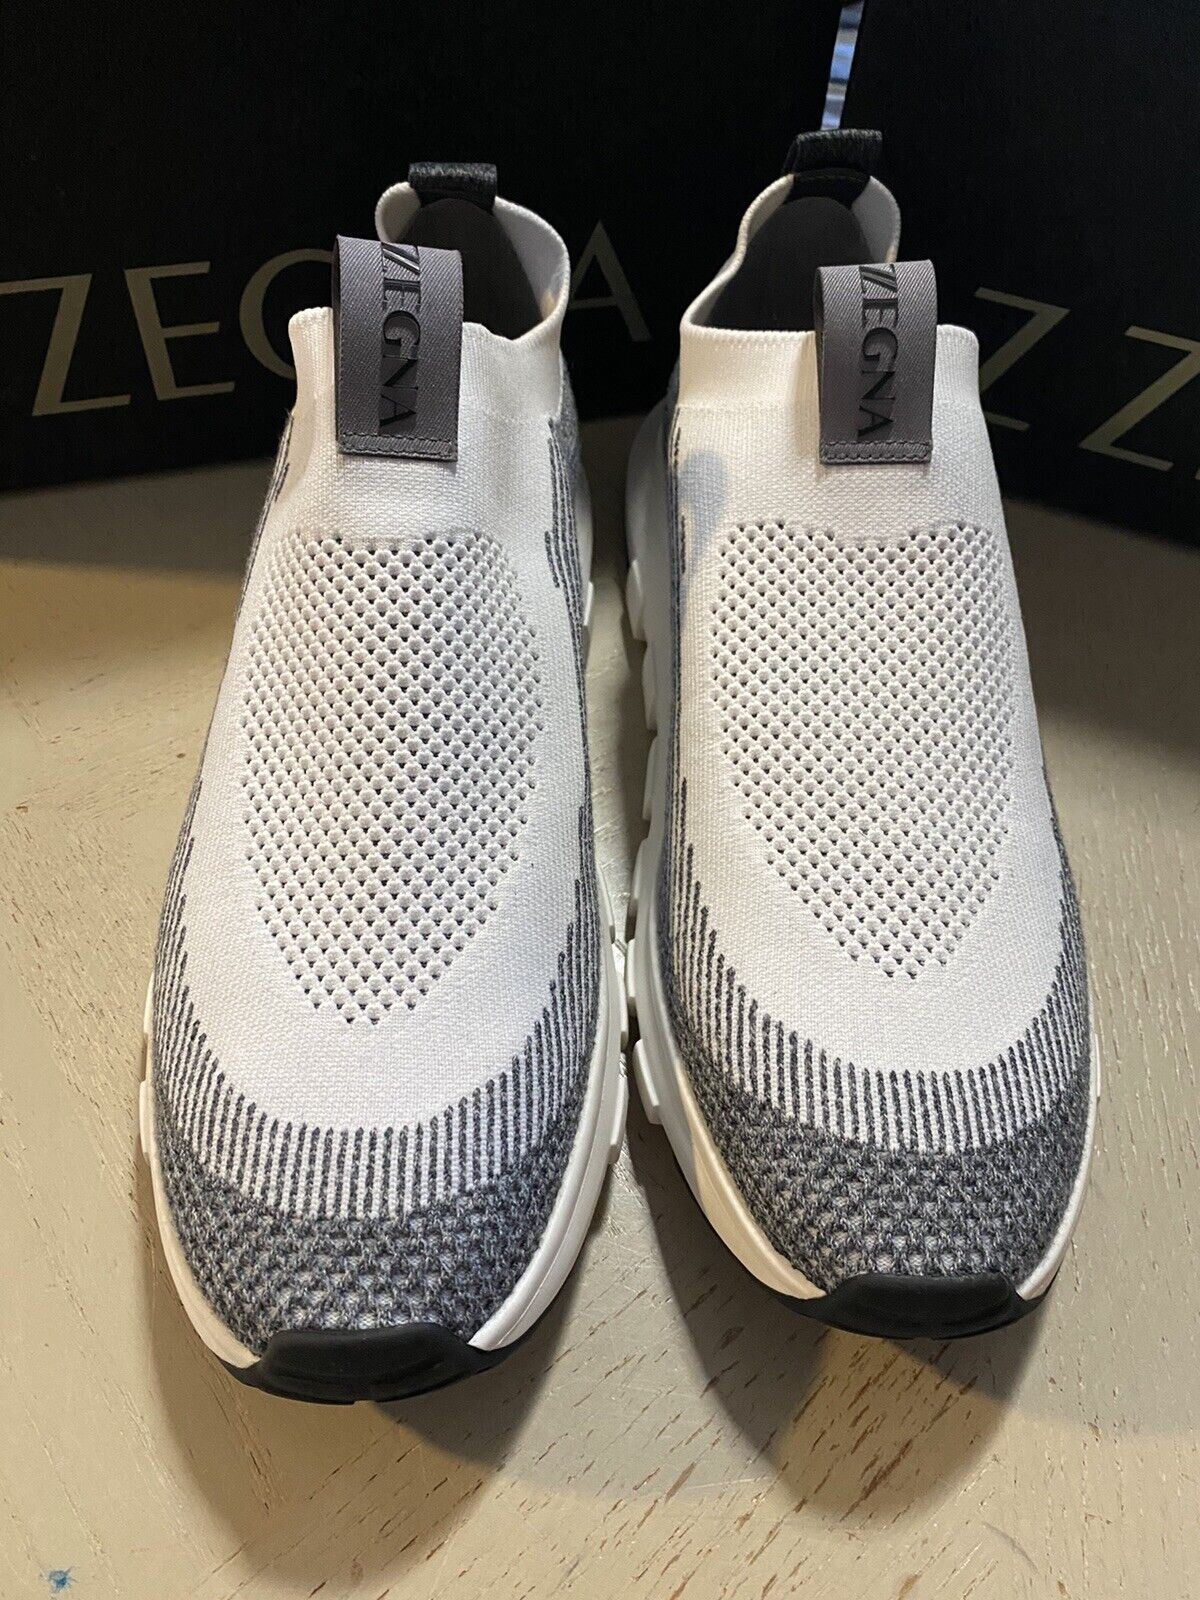 Neu $495 Z Zegna Herren Sock Runners Sneakers Schuhe Weiß/Grau 11,5 US/44,5 Eu